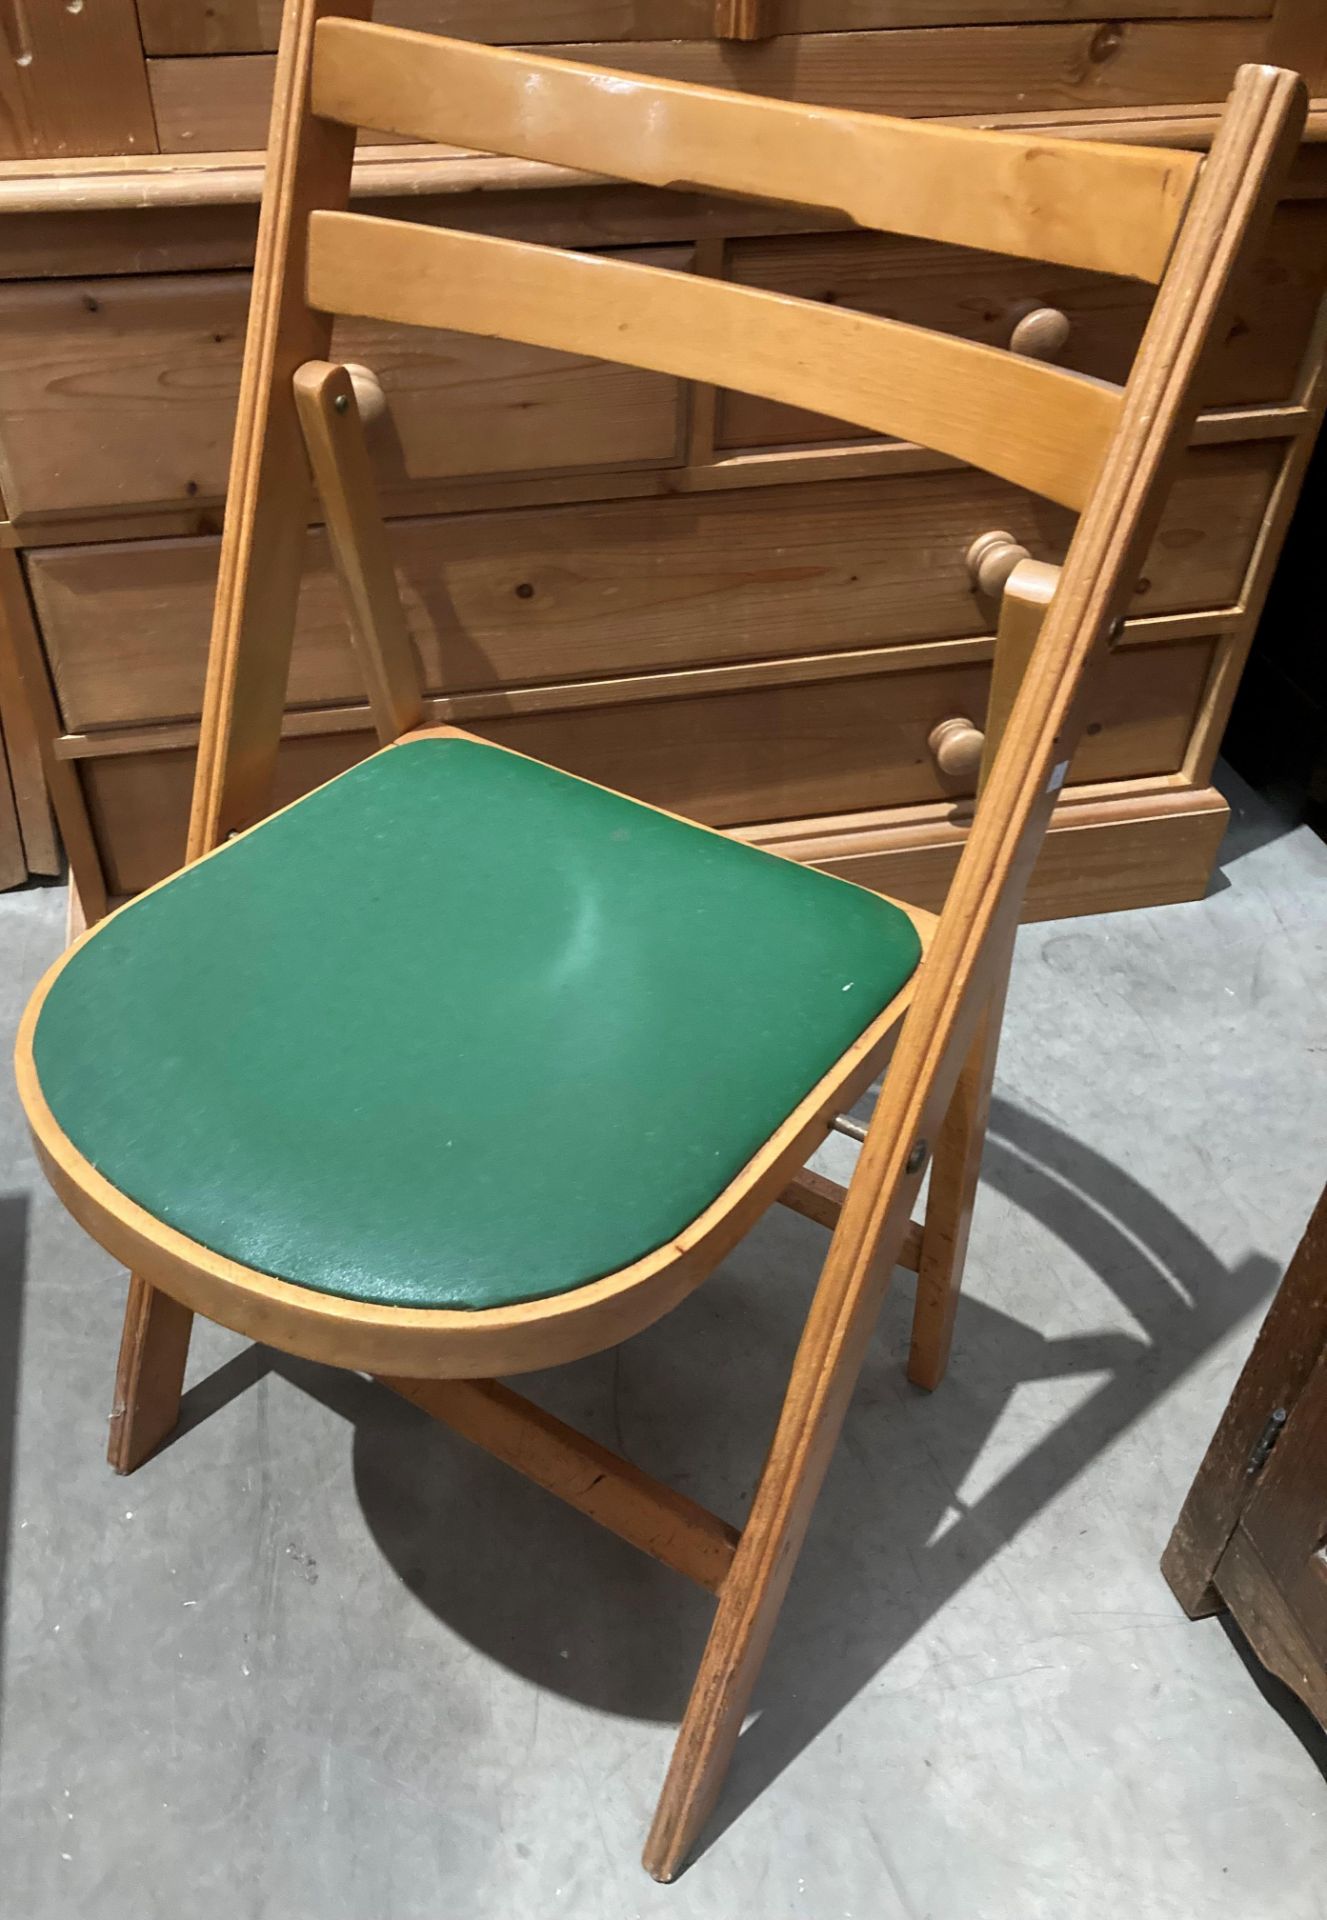 Four Apersite light oak folding meeting room chairs